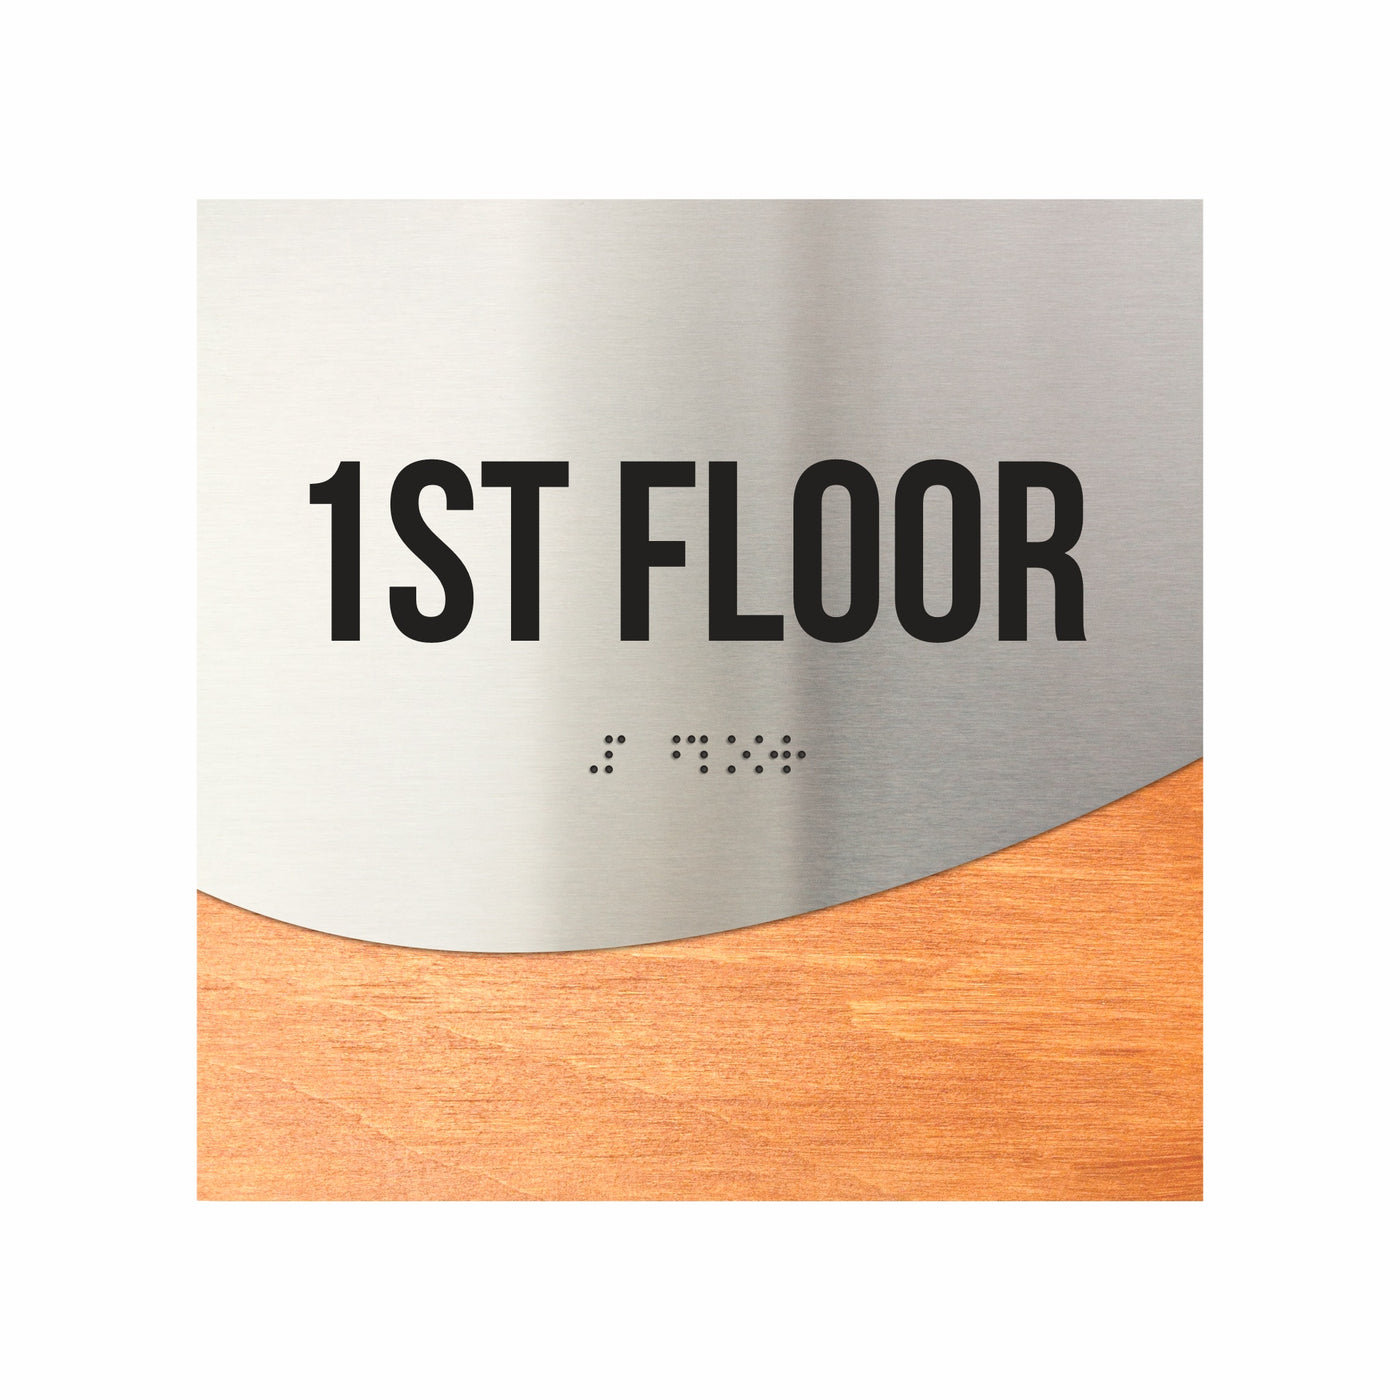 Floor Signs - Sign For 1st Floor - Stainless Steel & Wood  - "Jure" Design